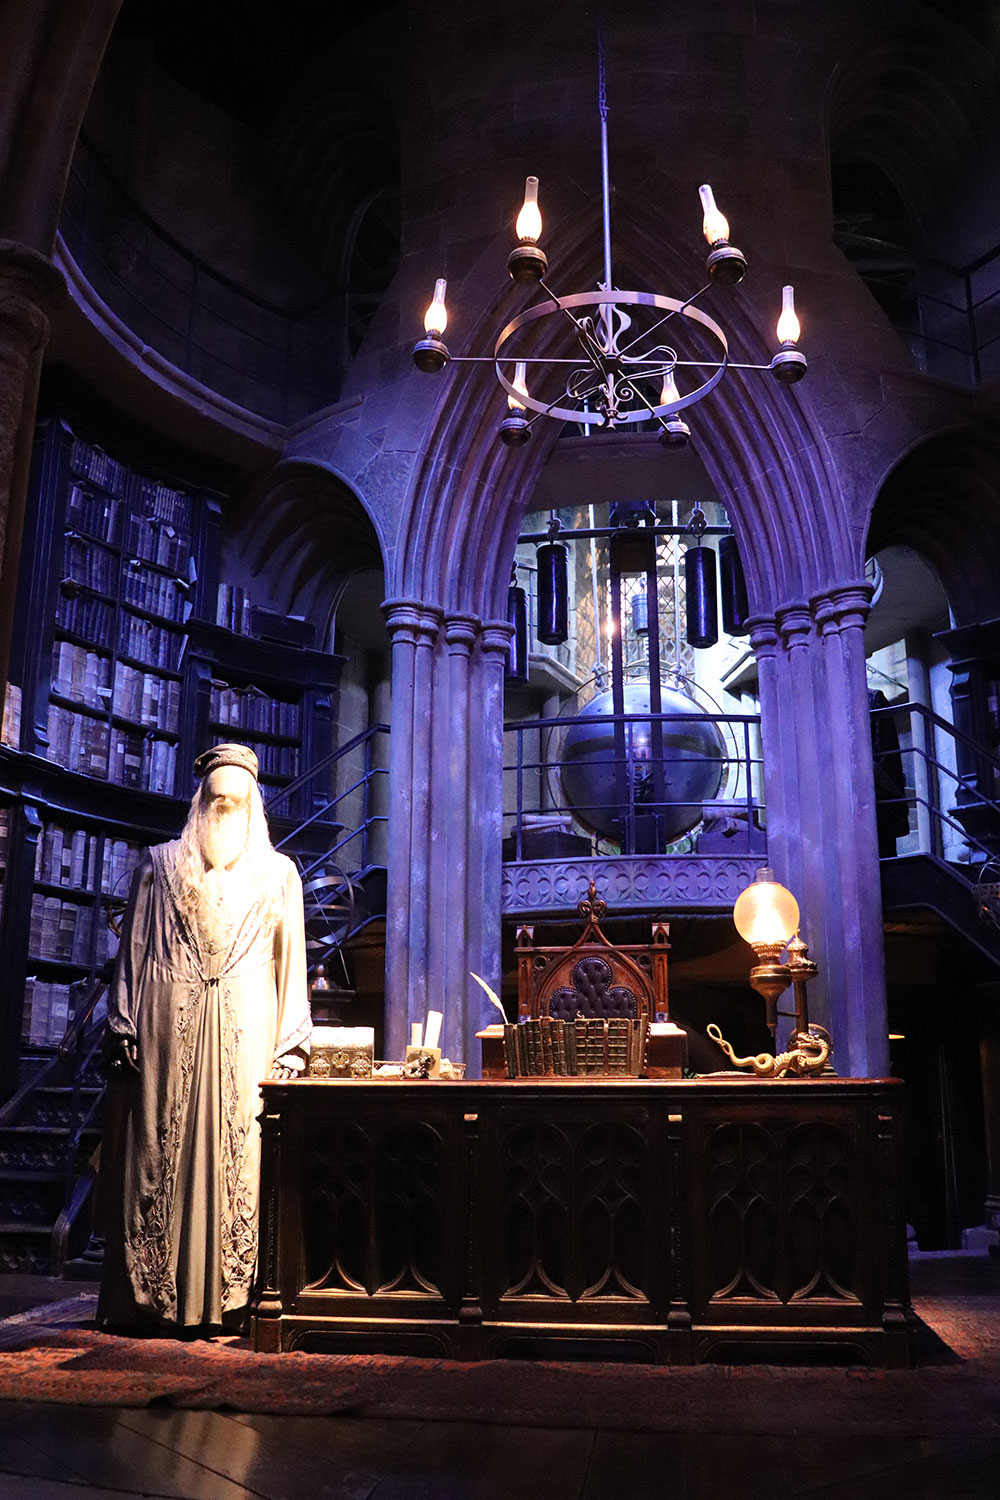 Dumbledore's Office, Harry Potter Studio Tour